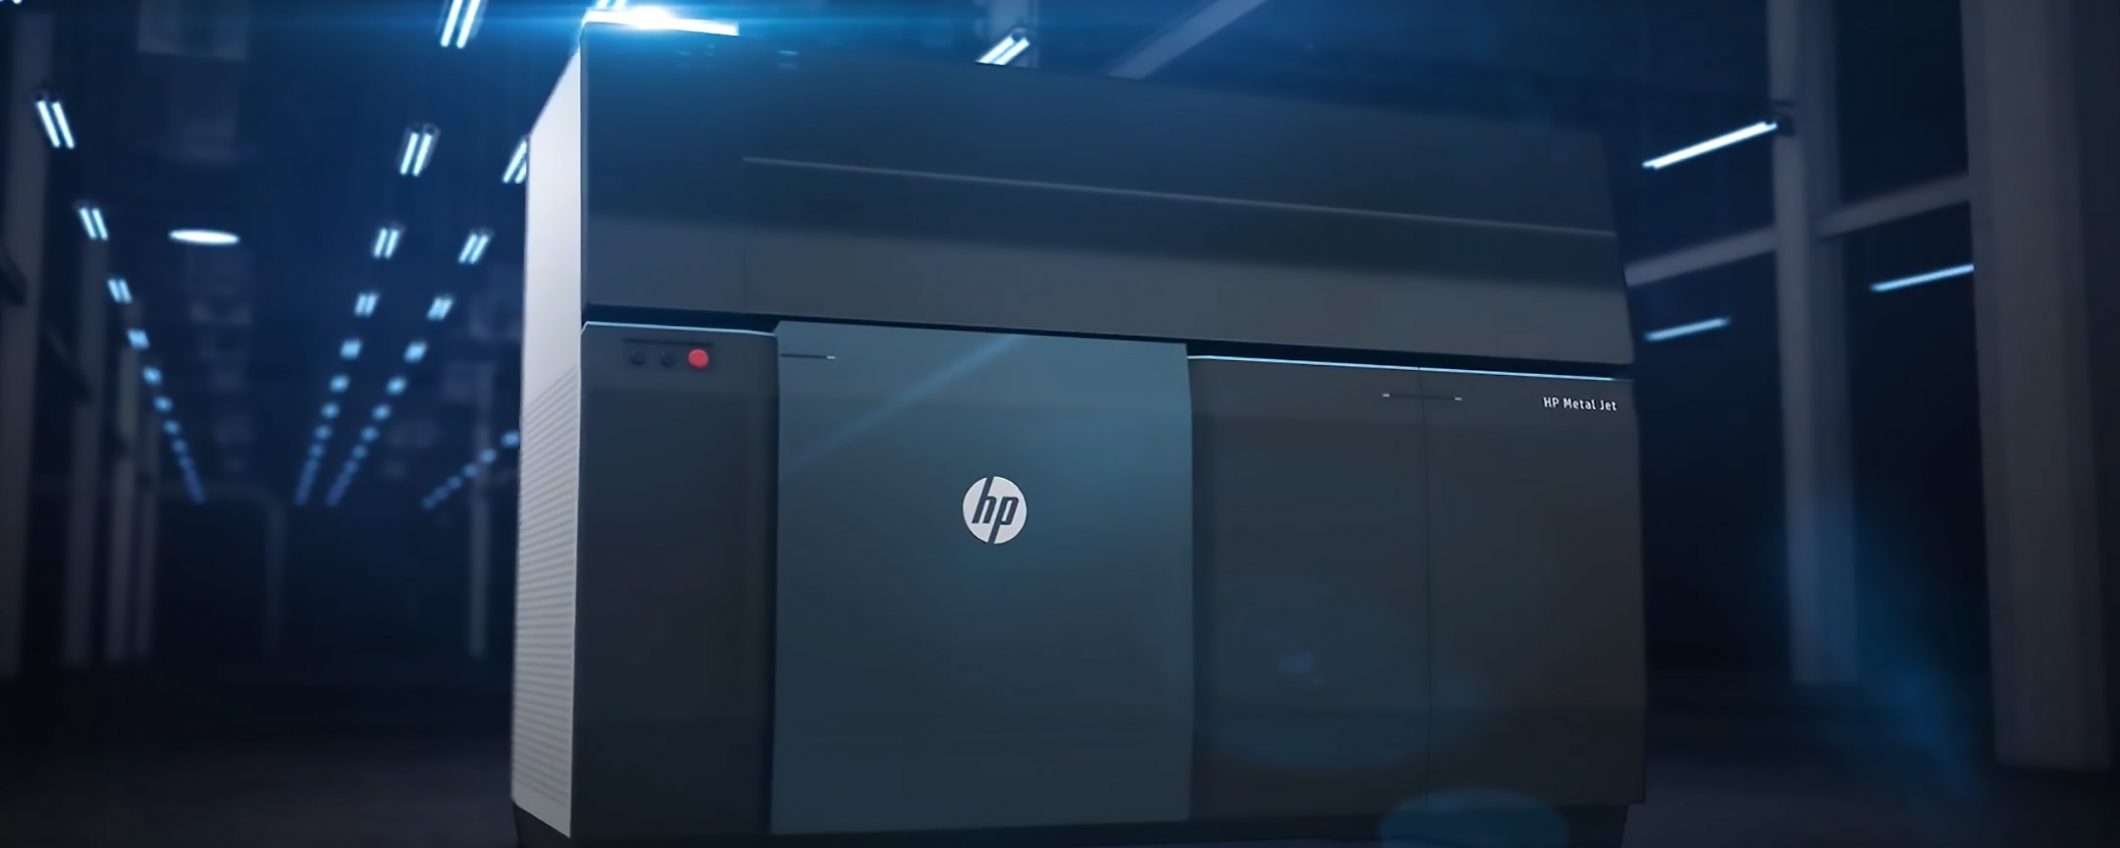 HP Metal Jet, stampa 3D per l'industria